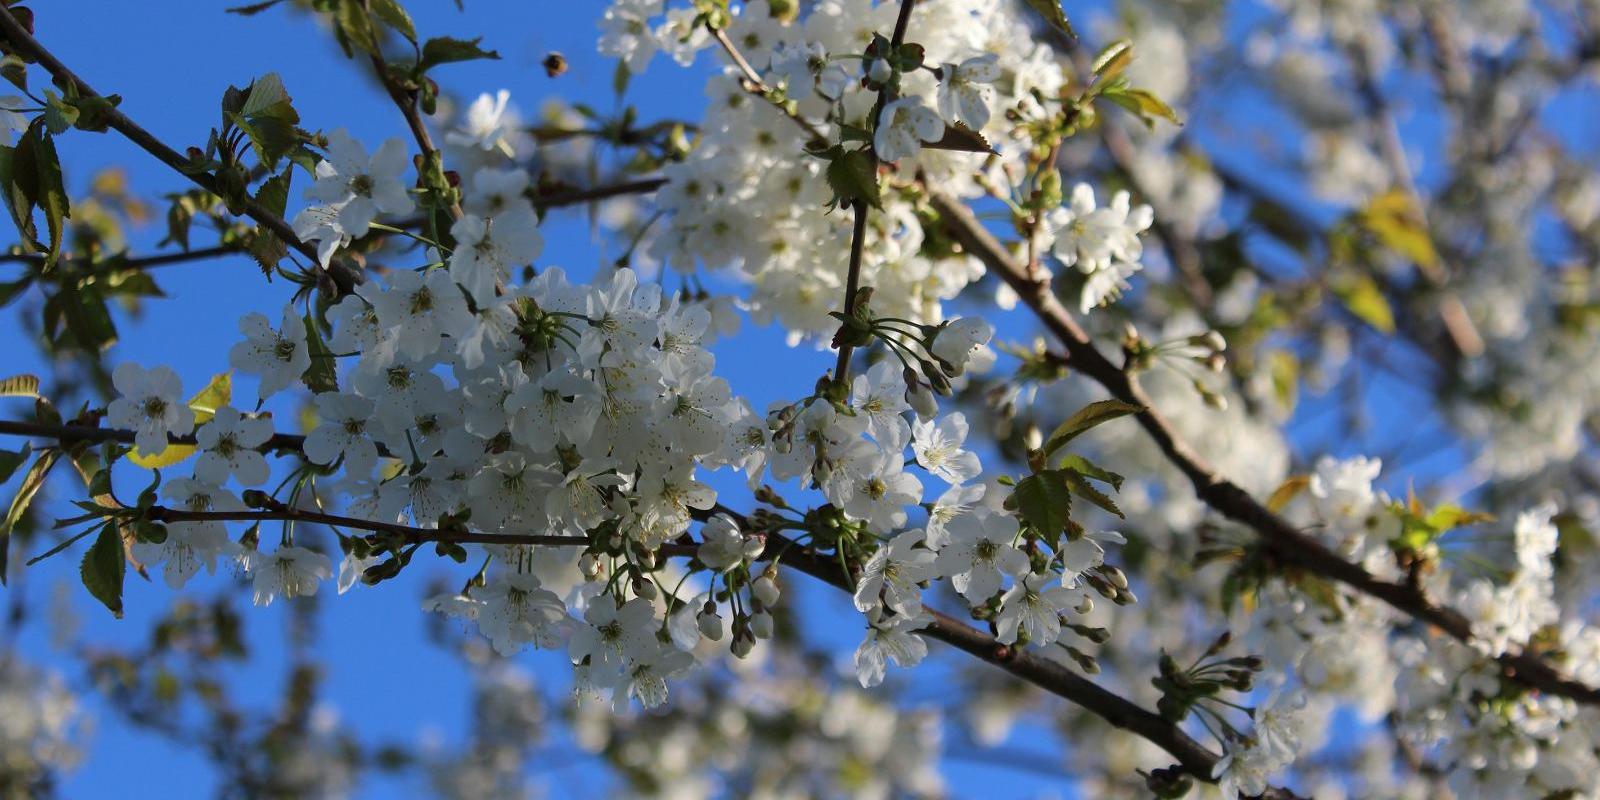 Järiste Winery, flowering orchard in spring